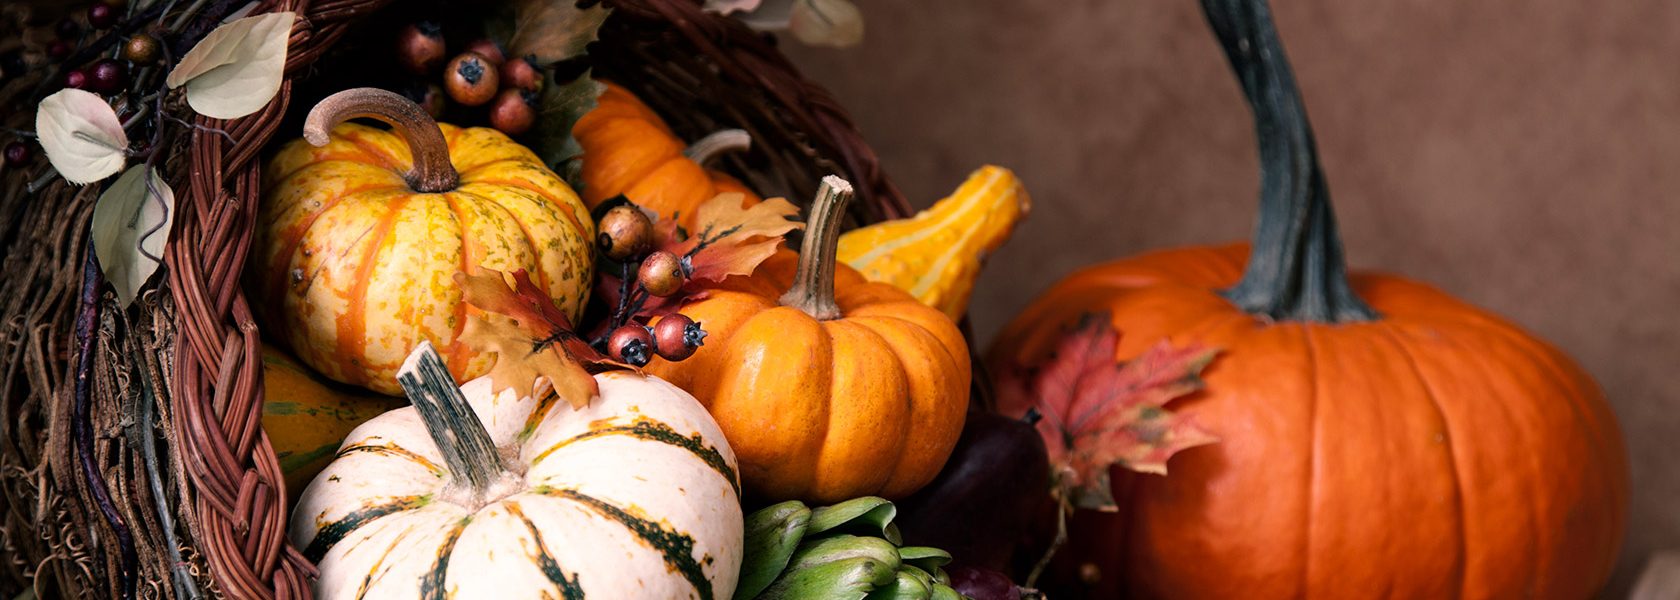 Beautiful arrangement of fall gourds and pumpkins in woven horn of plenty.